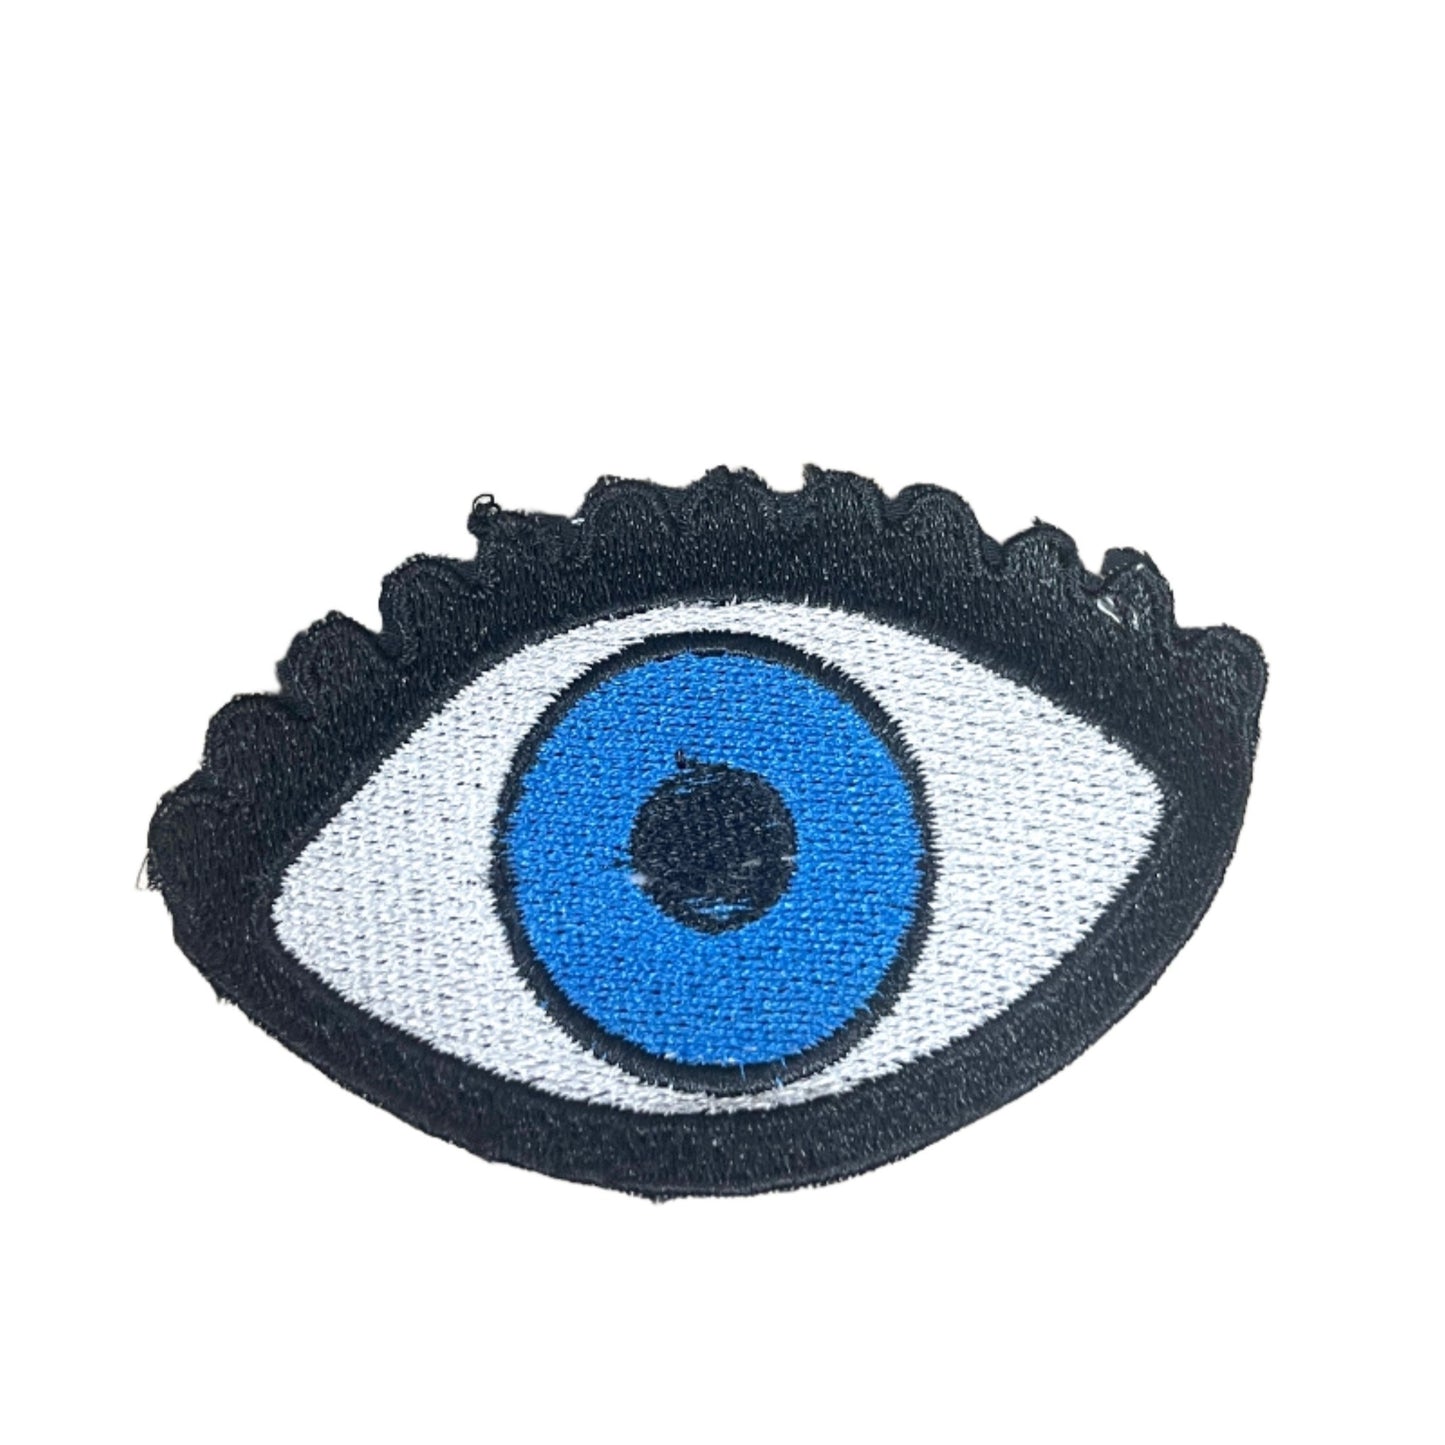 Handmade Evil Eye Patches